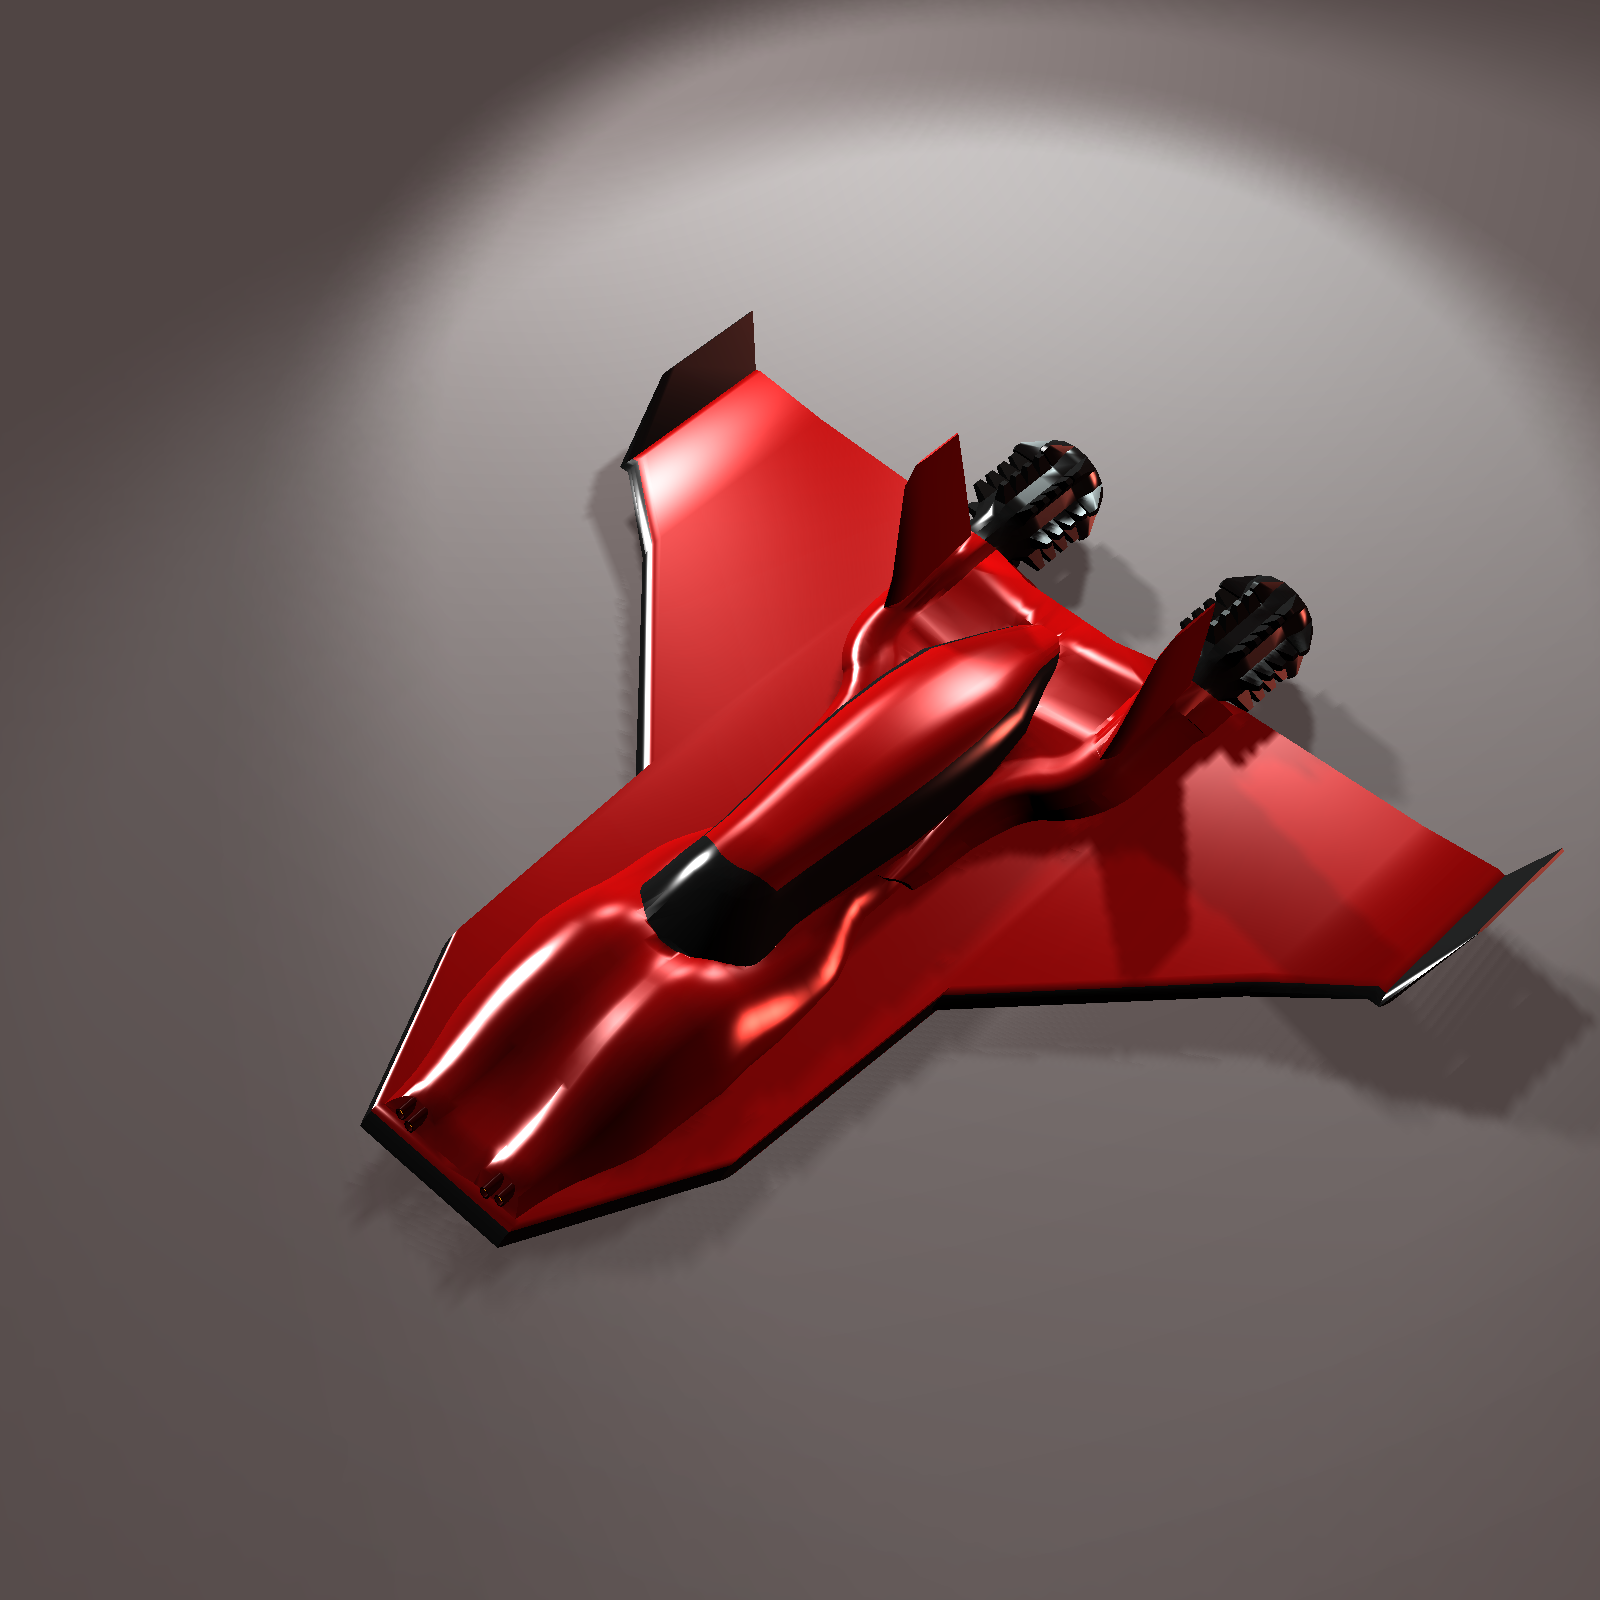 Future Ferrari :-) image - VITRIOL 3D - Mod DB